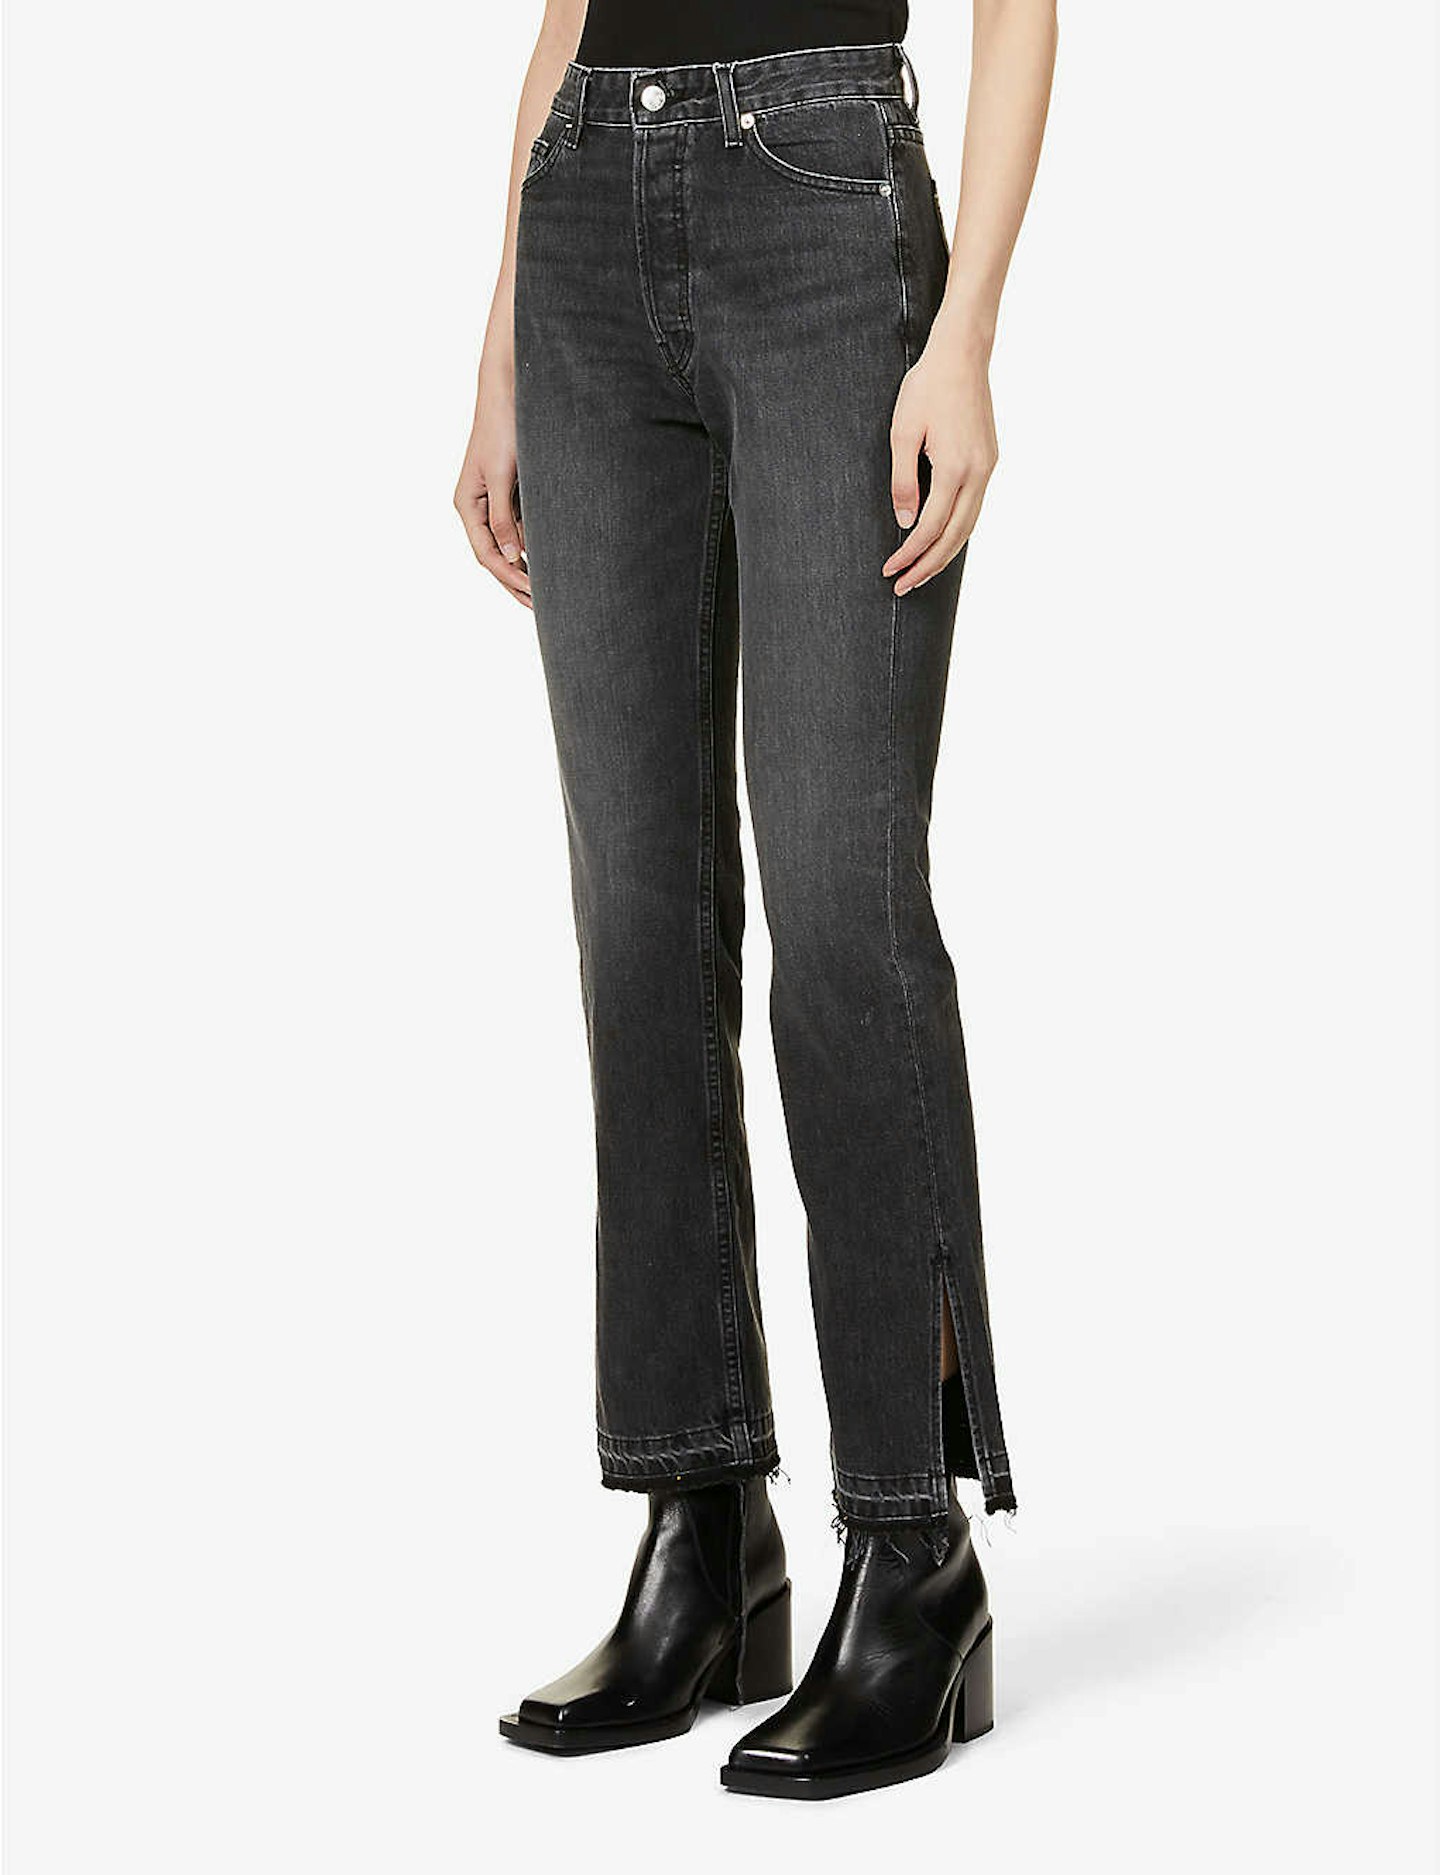 EB Denim, Upcycled Unraveled Split Hem straight-leg high-rise jeans, £260